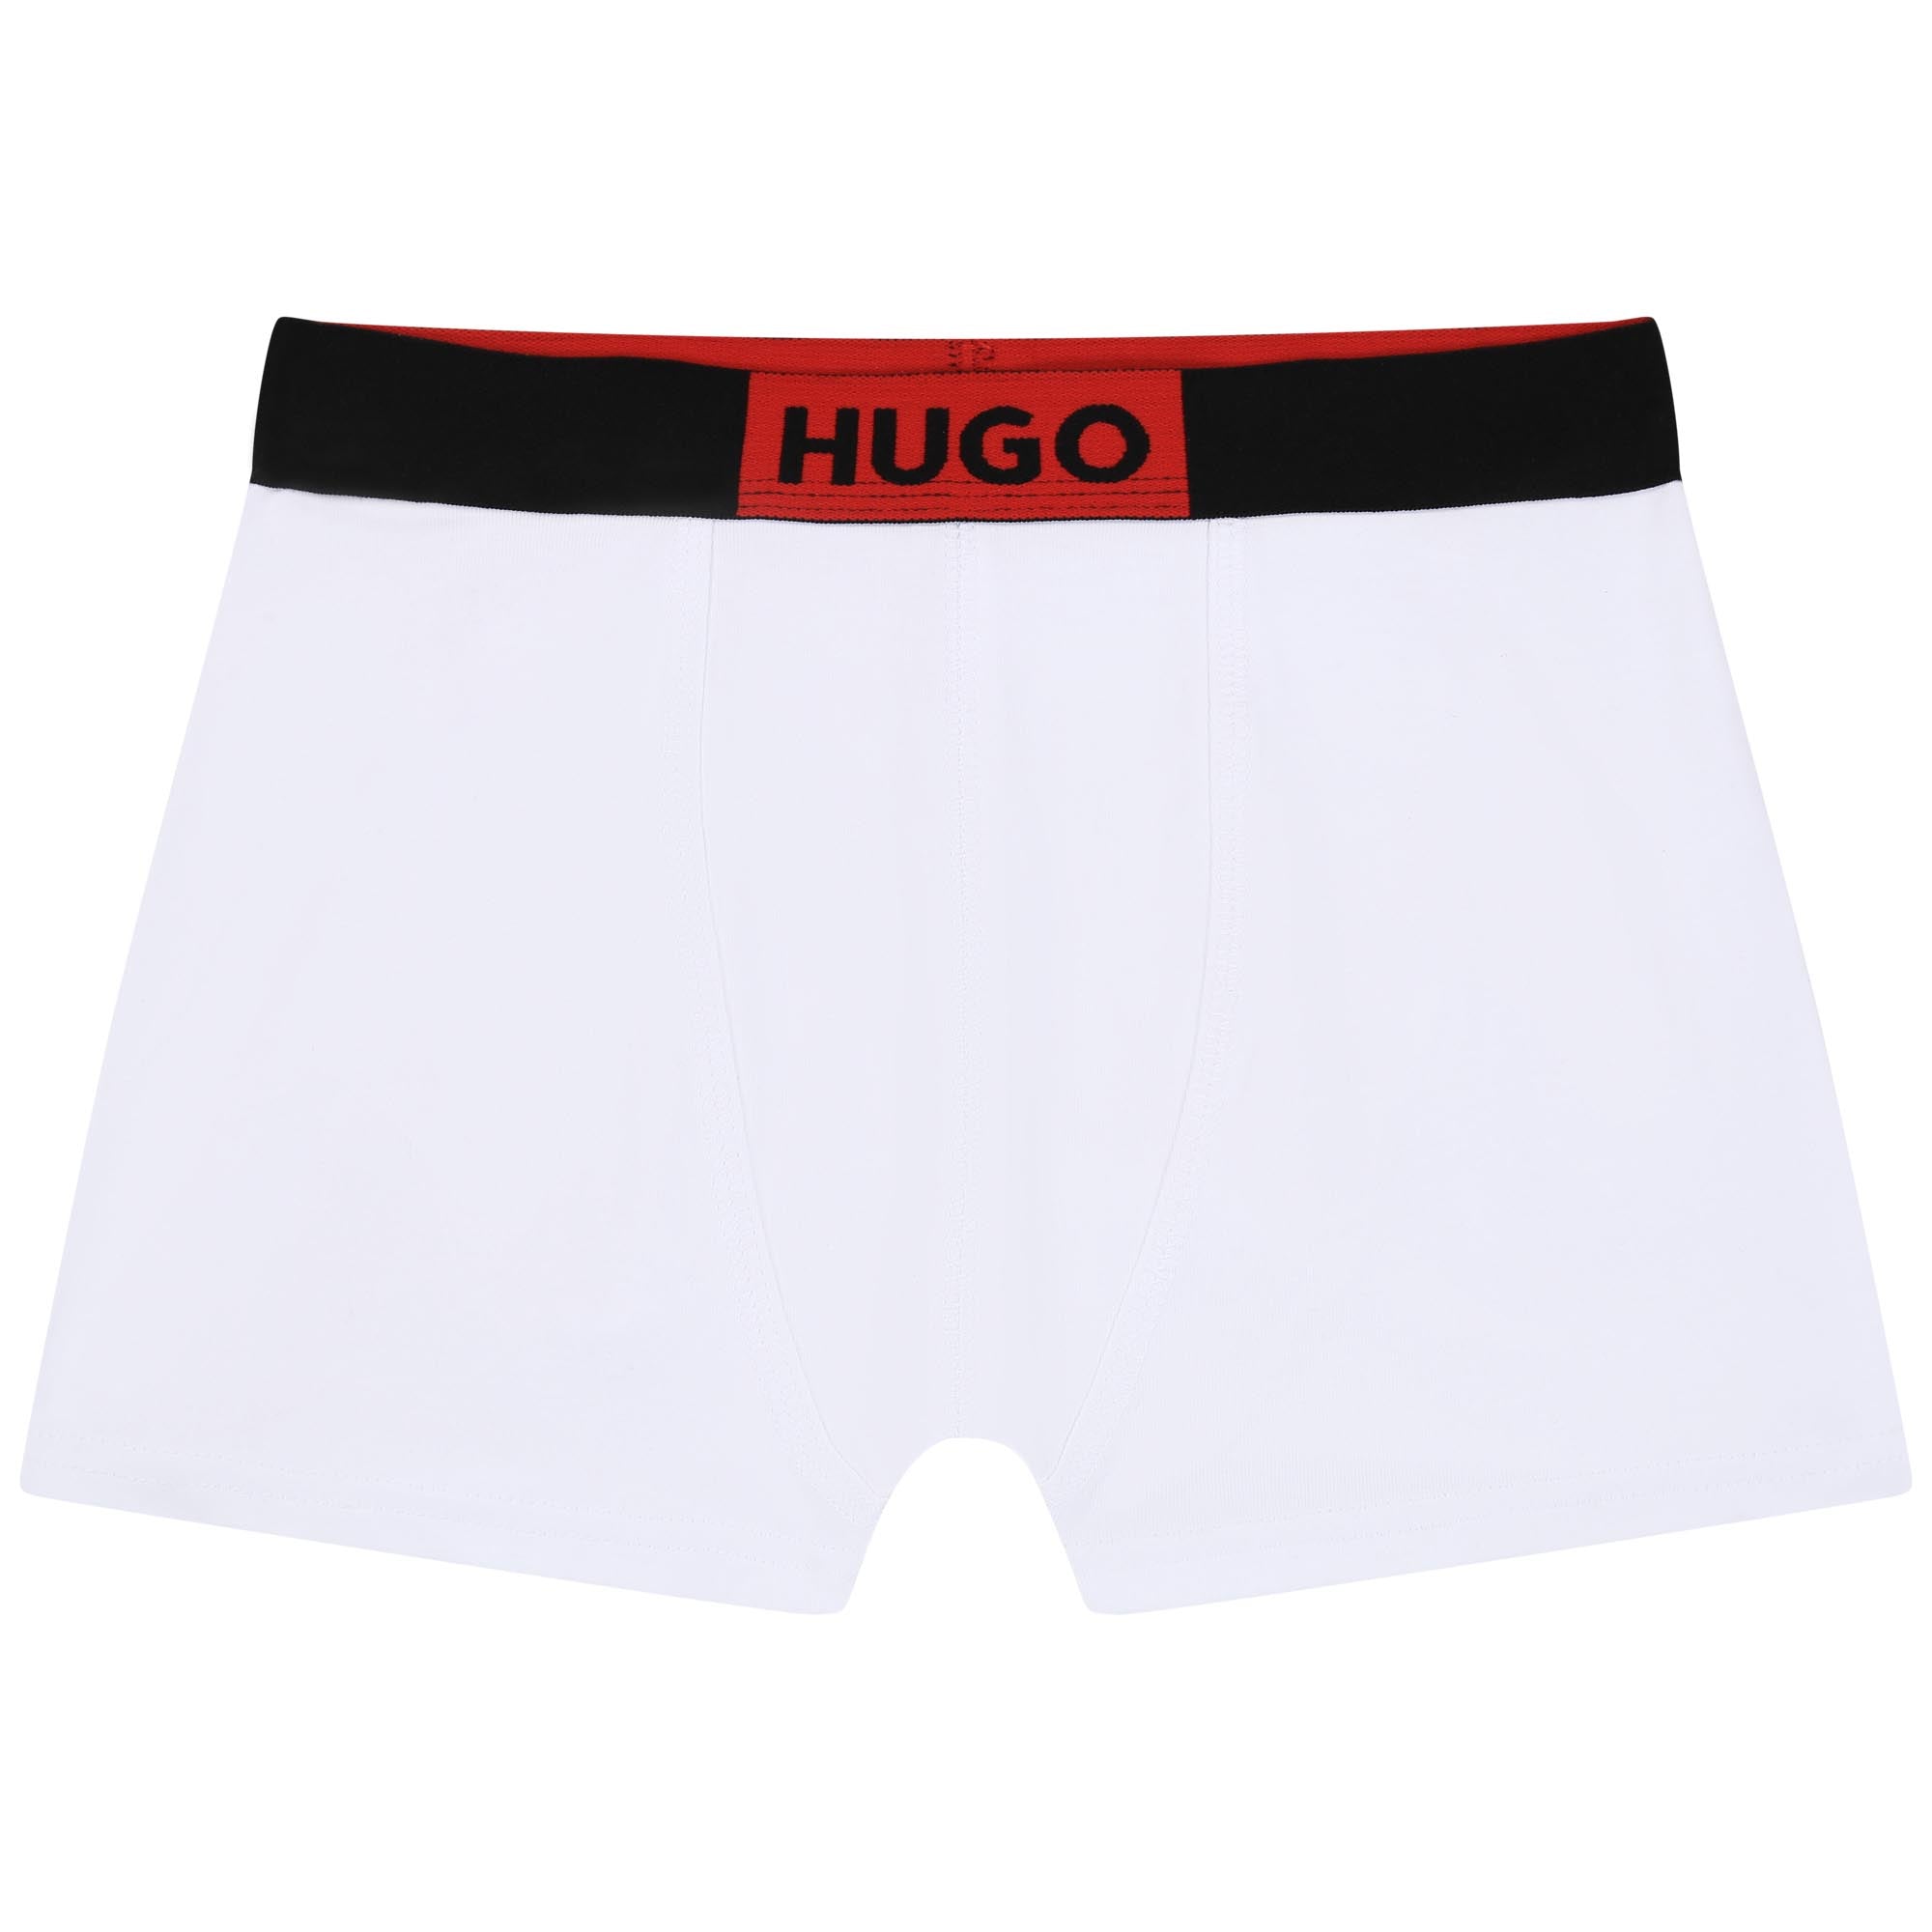 Hugo B&W Boxers Set